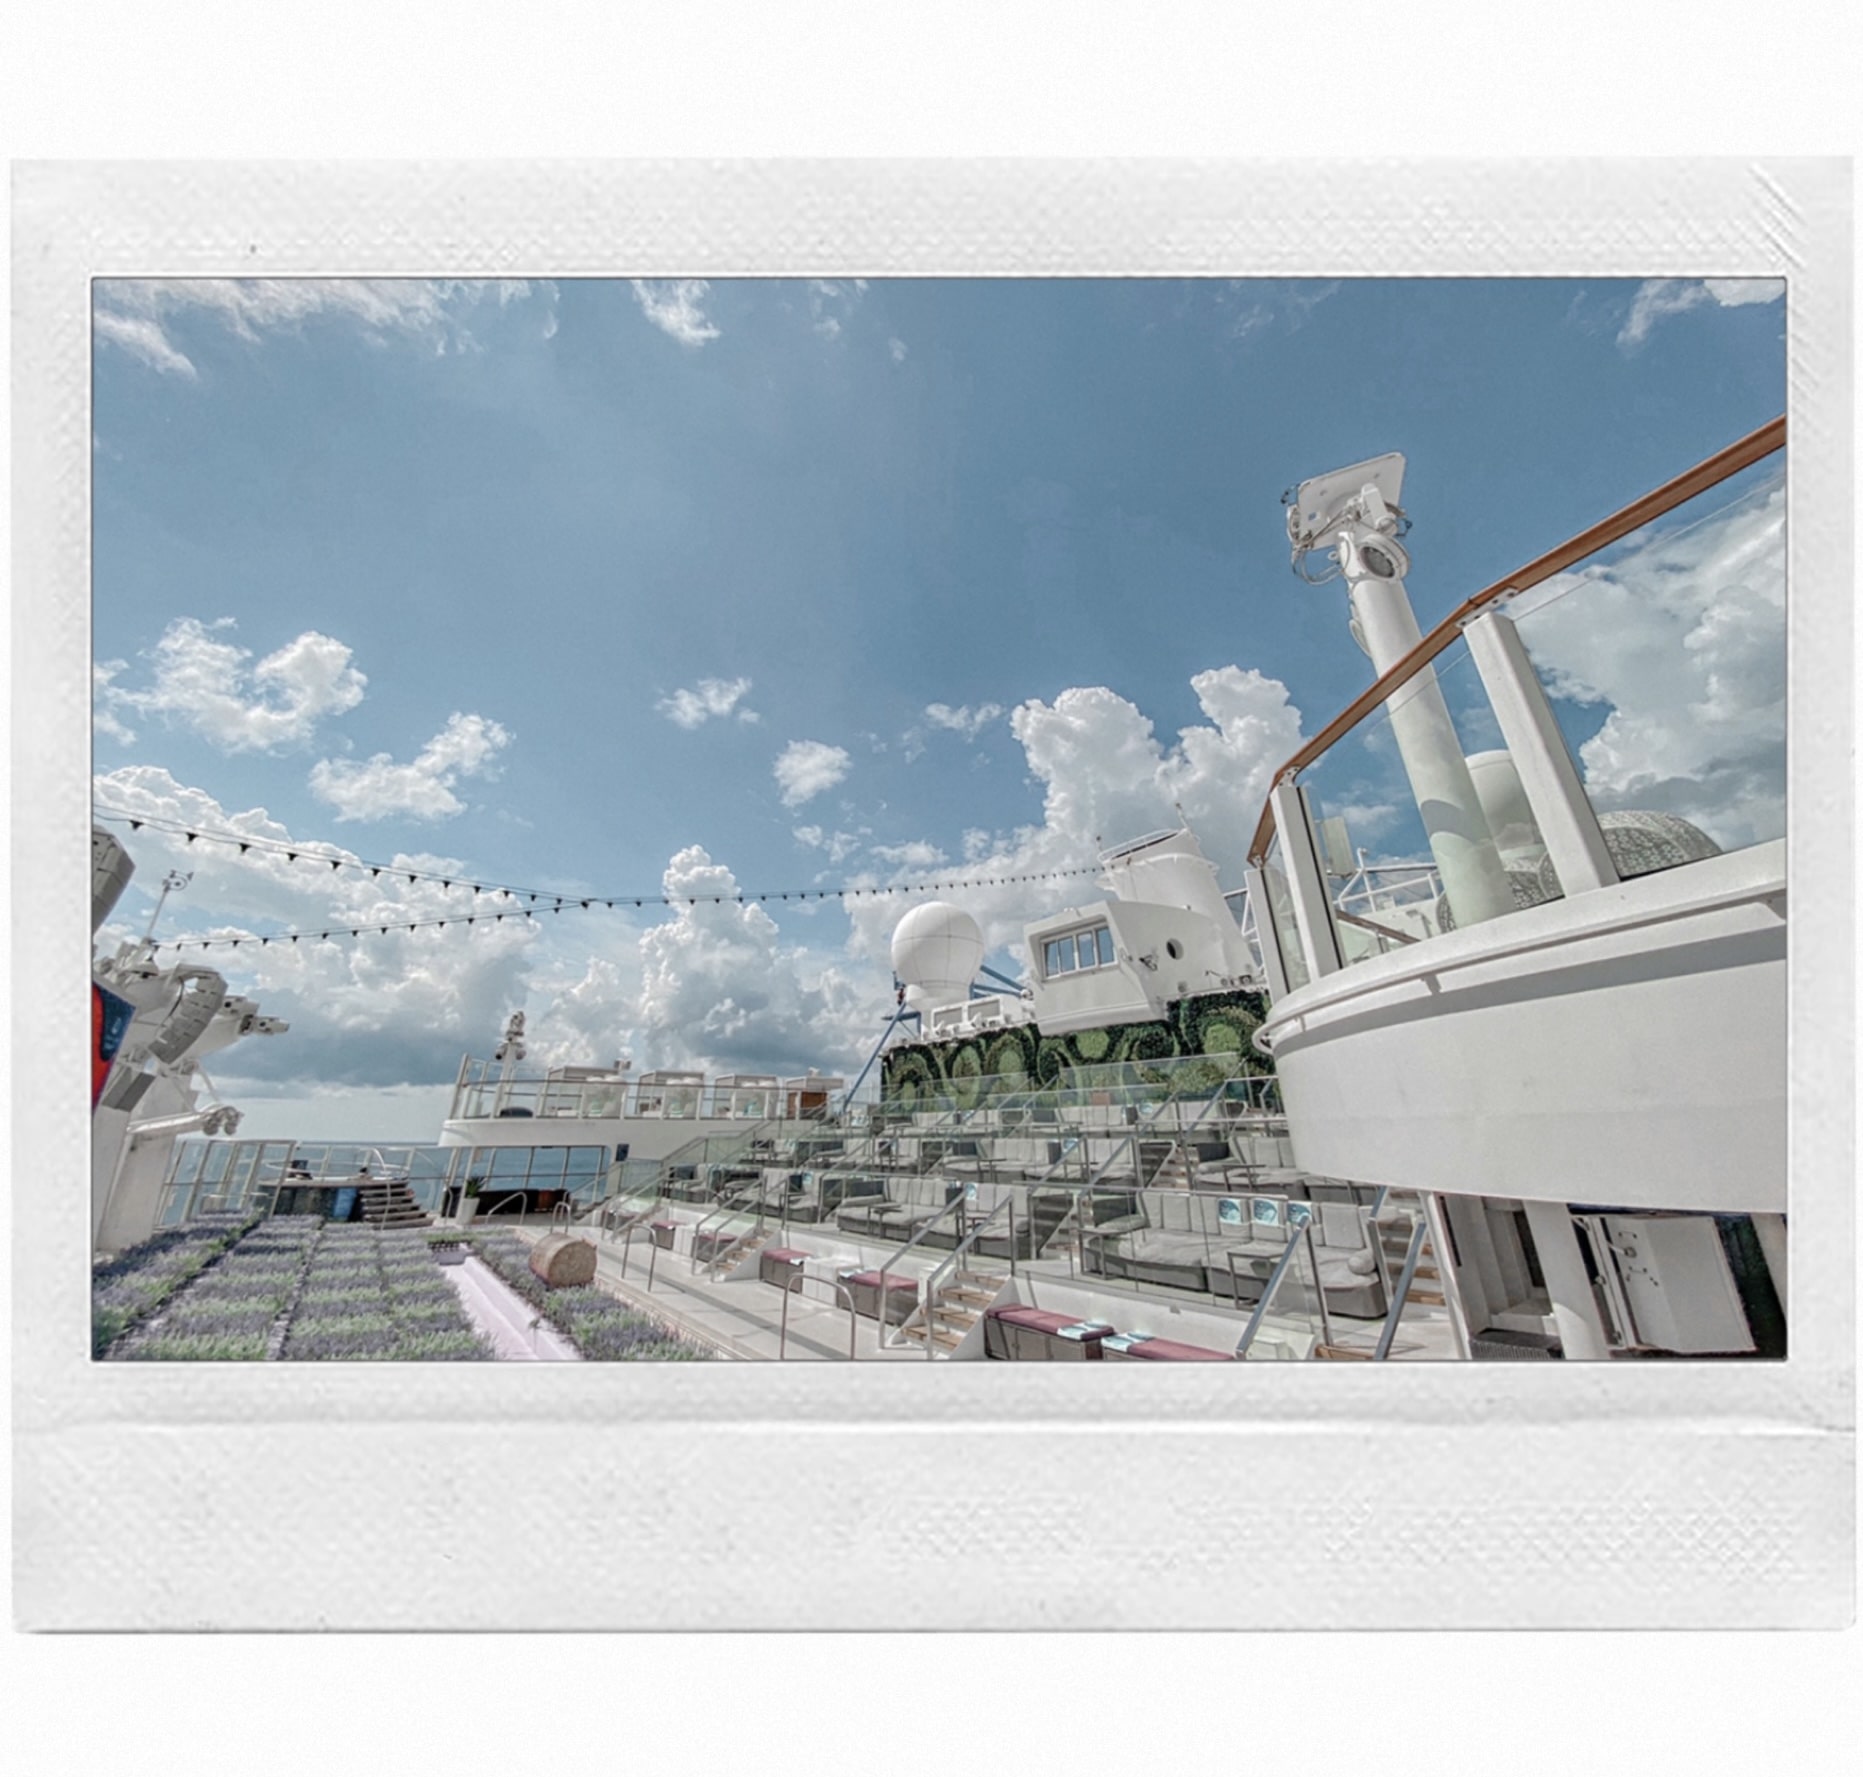 dream-cruises-review-zouk-beach-club